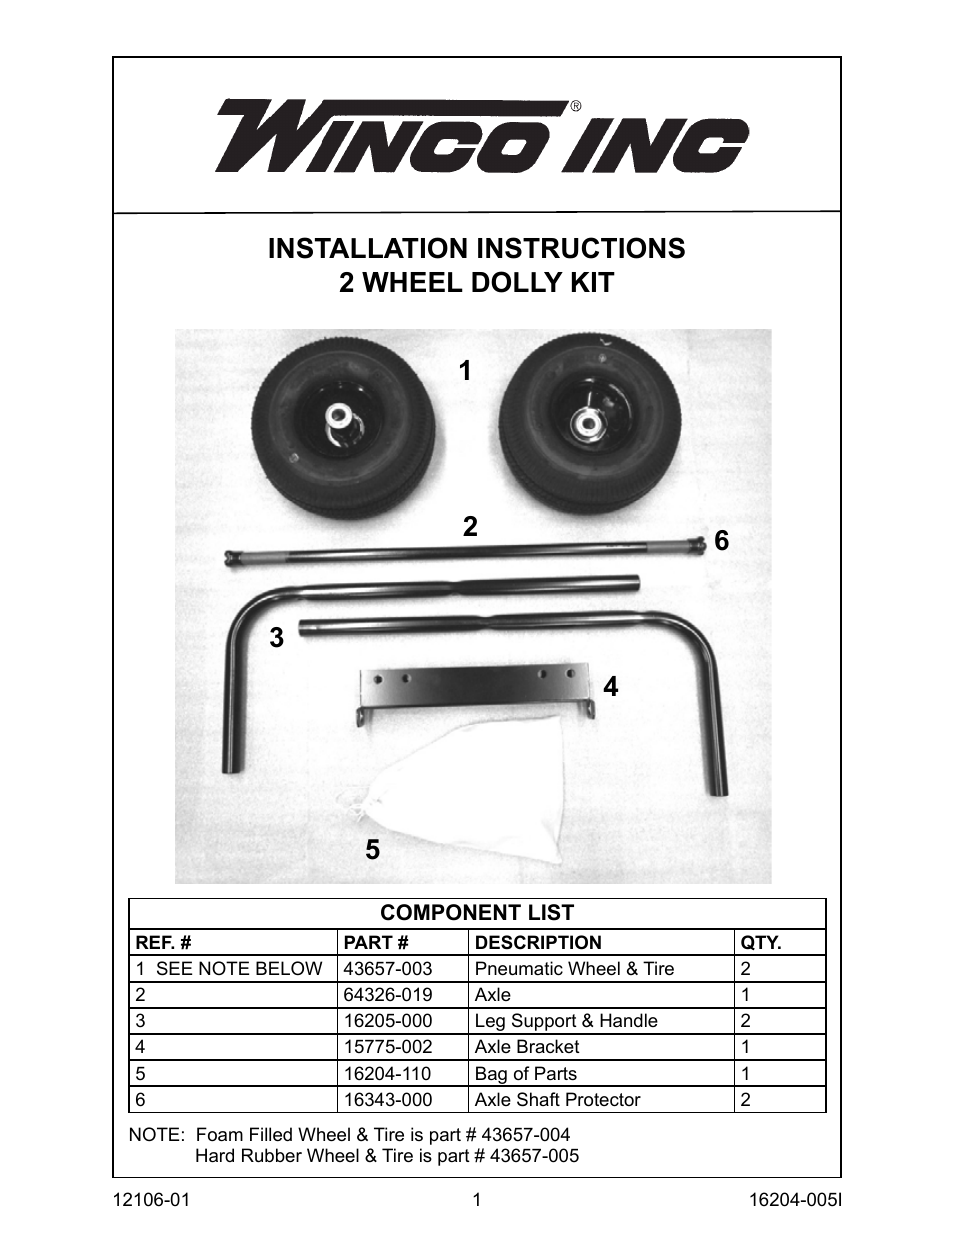 2-Wheel Dolly Kit Assembly Instructions